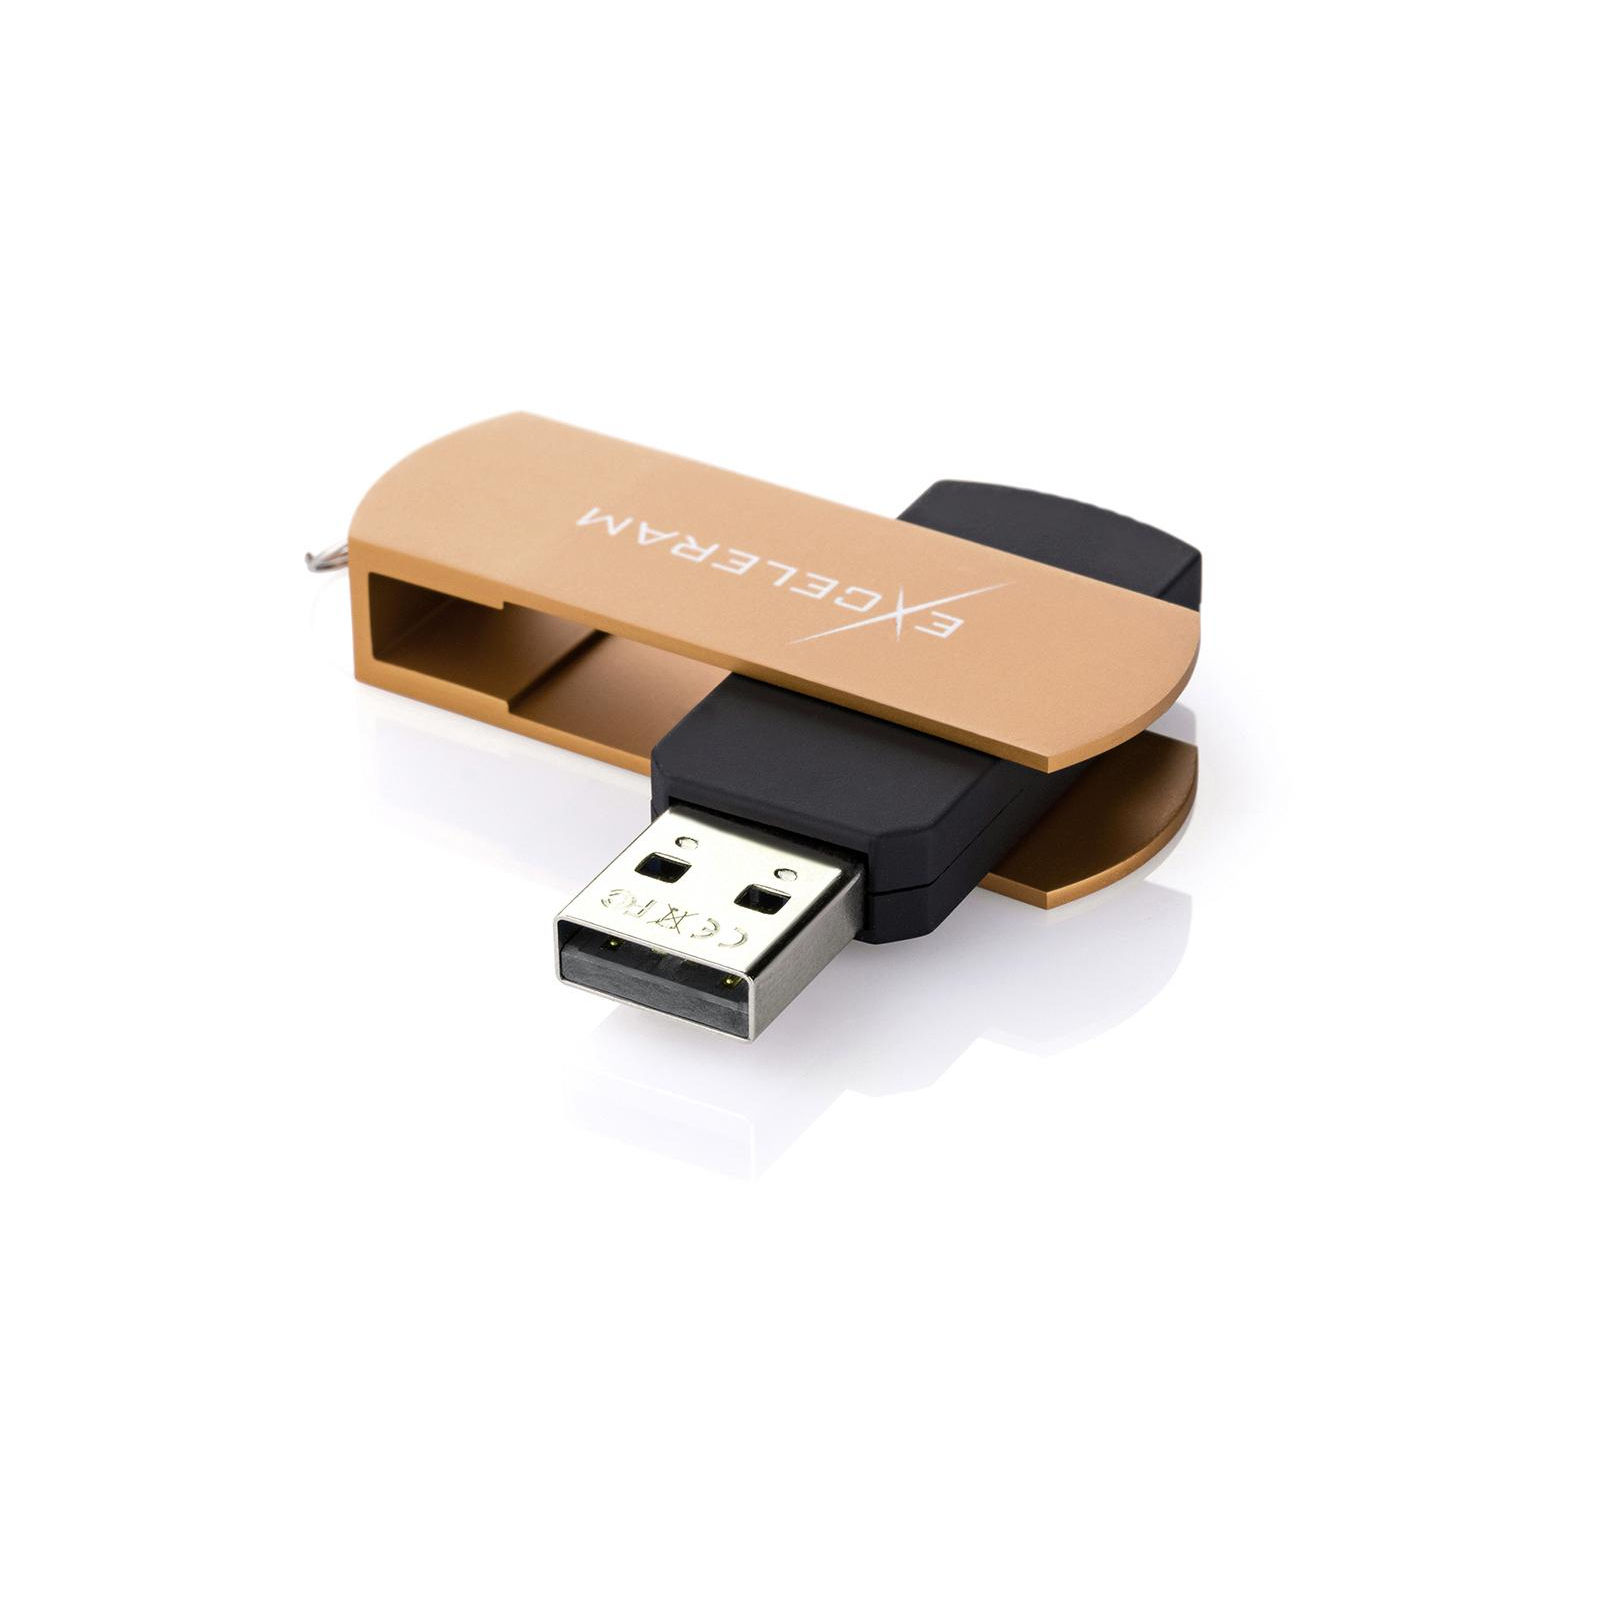 USB флеш накопитель eXceleram 64GB P2 Series Blue/Black USB 2.0 (EXP2U2BLB64) изображение 2